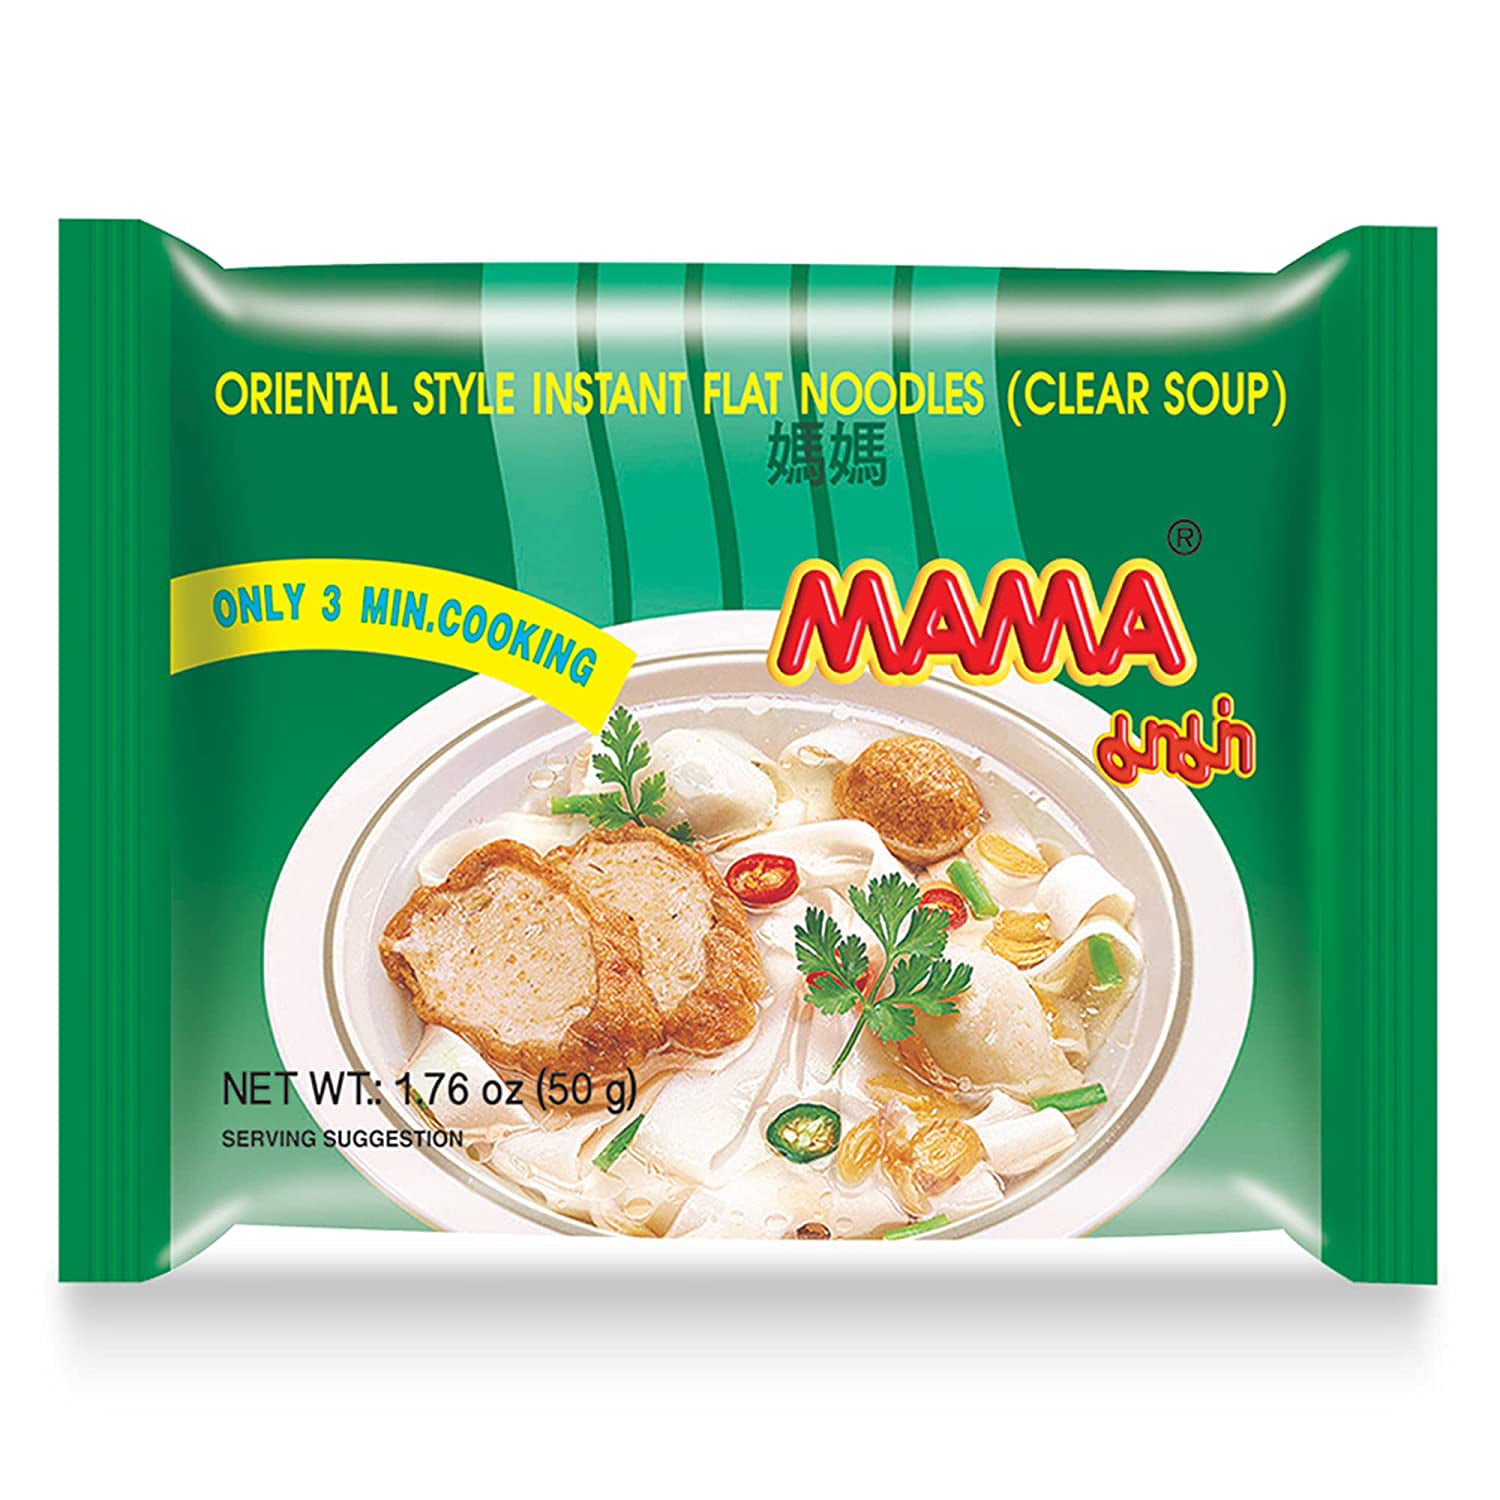 Mama Pork Flavor Instant Ramen - 3.17 oz (90 g) - Well Come Asian Market